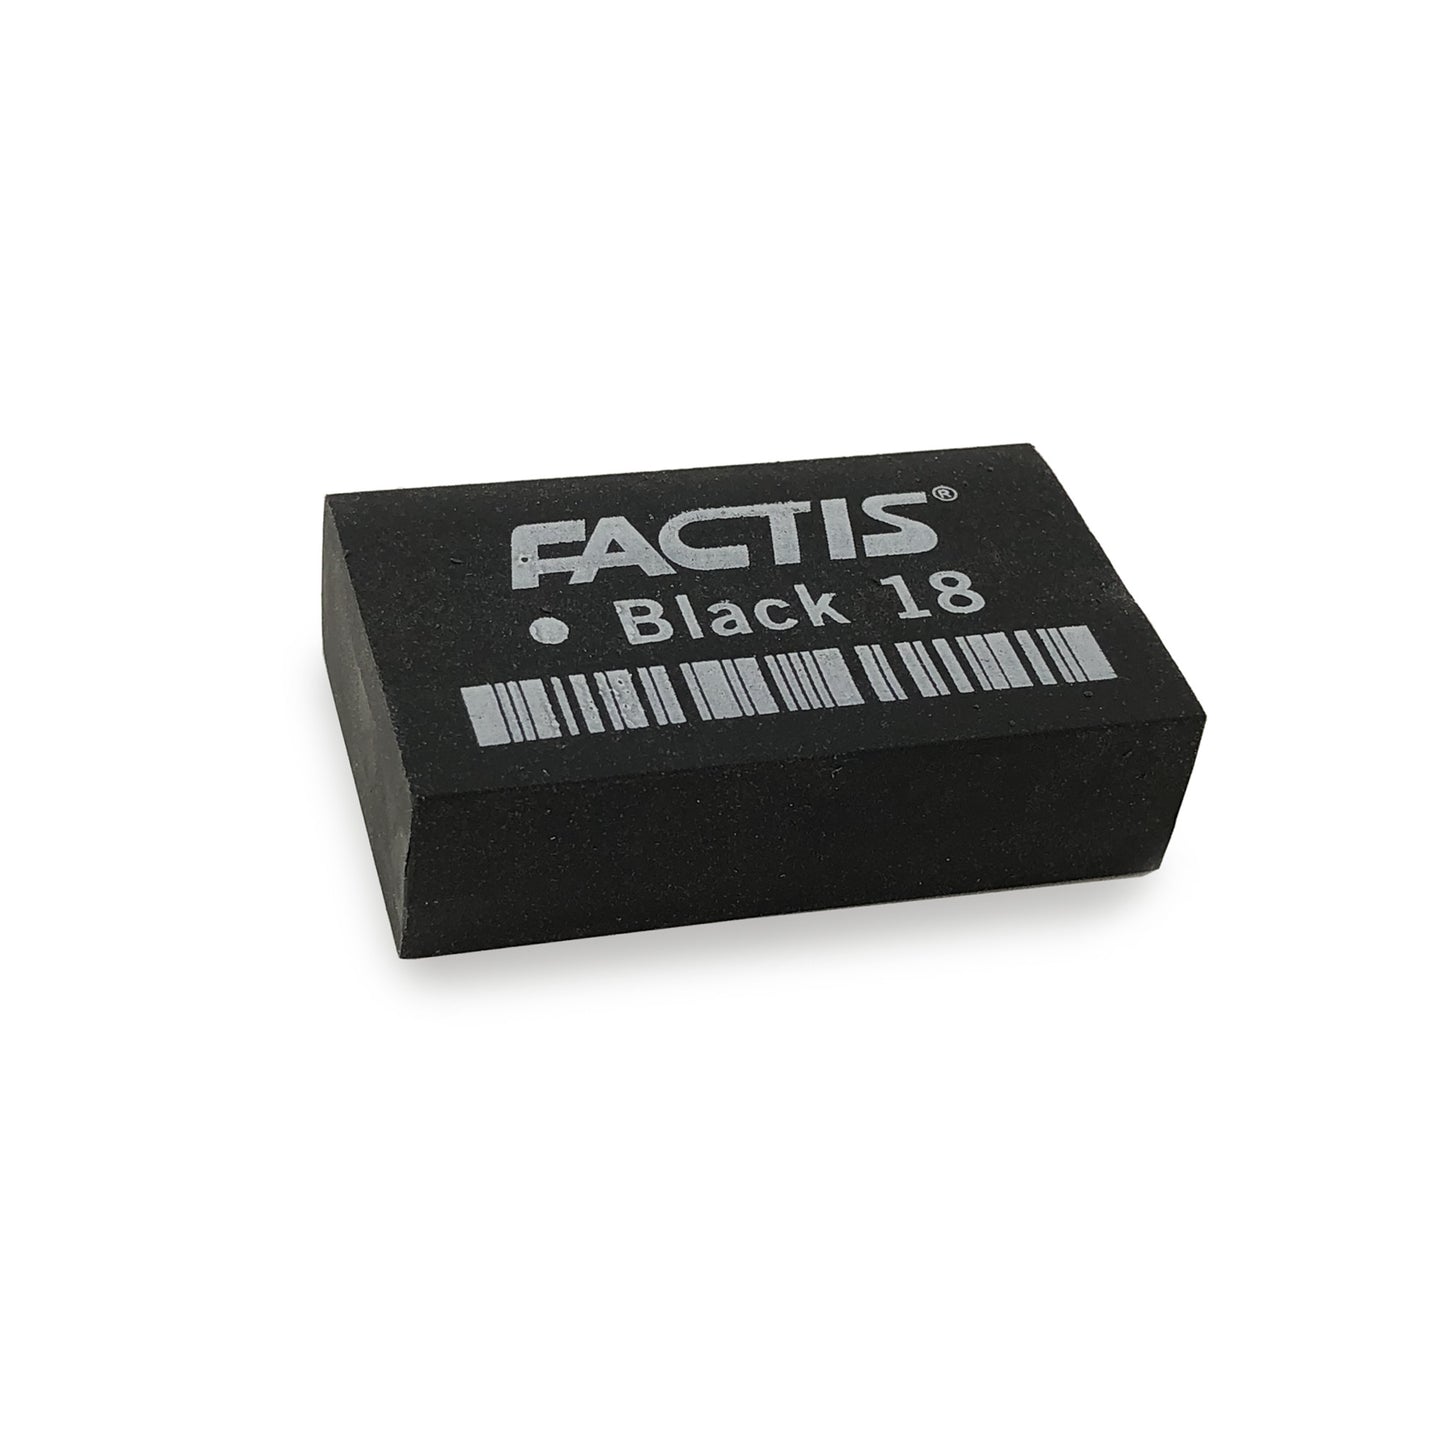 Factis Black 18 Eraser